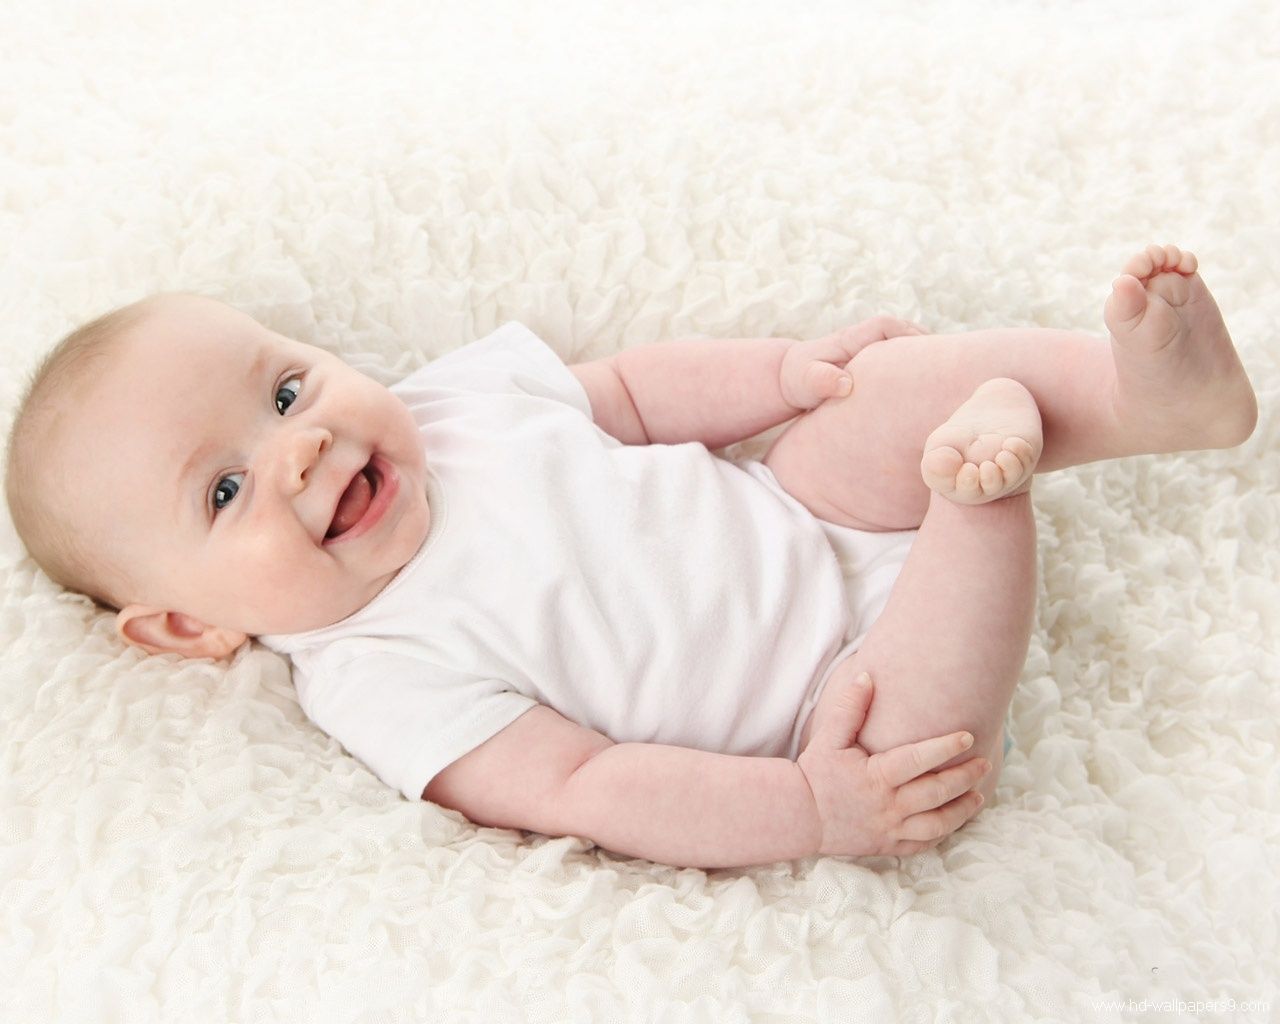 Smile Baby Photos Download - HD Wallpaper 